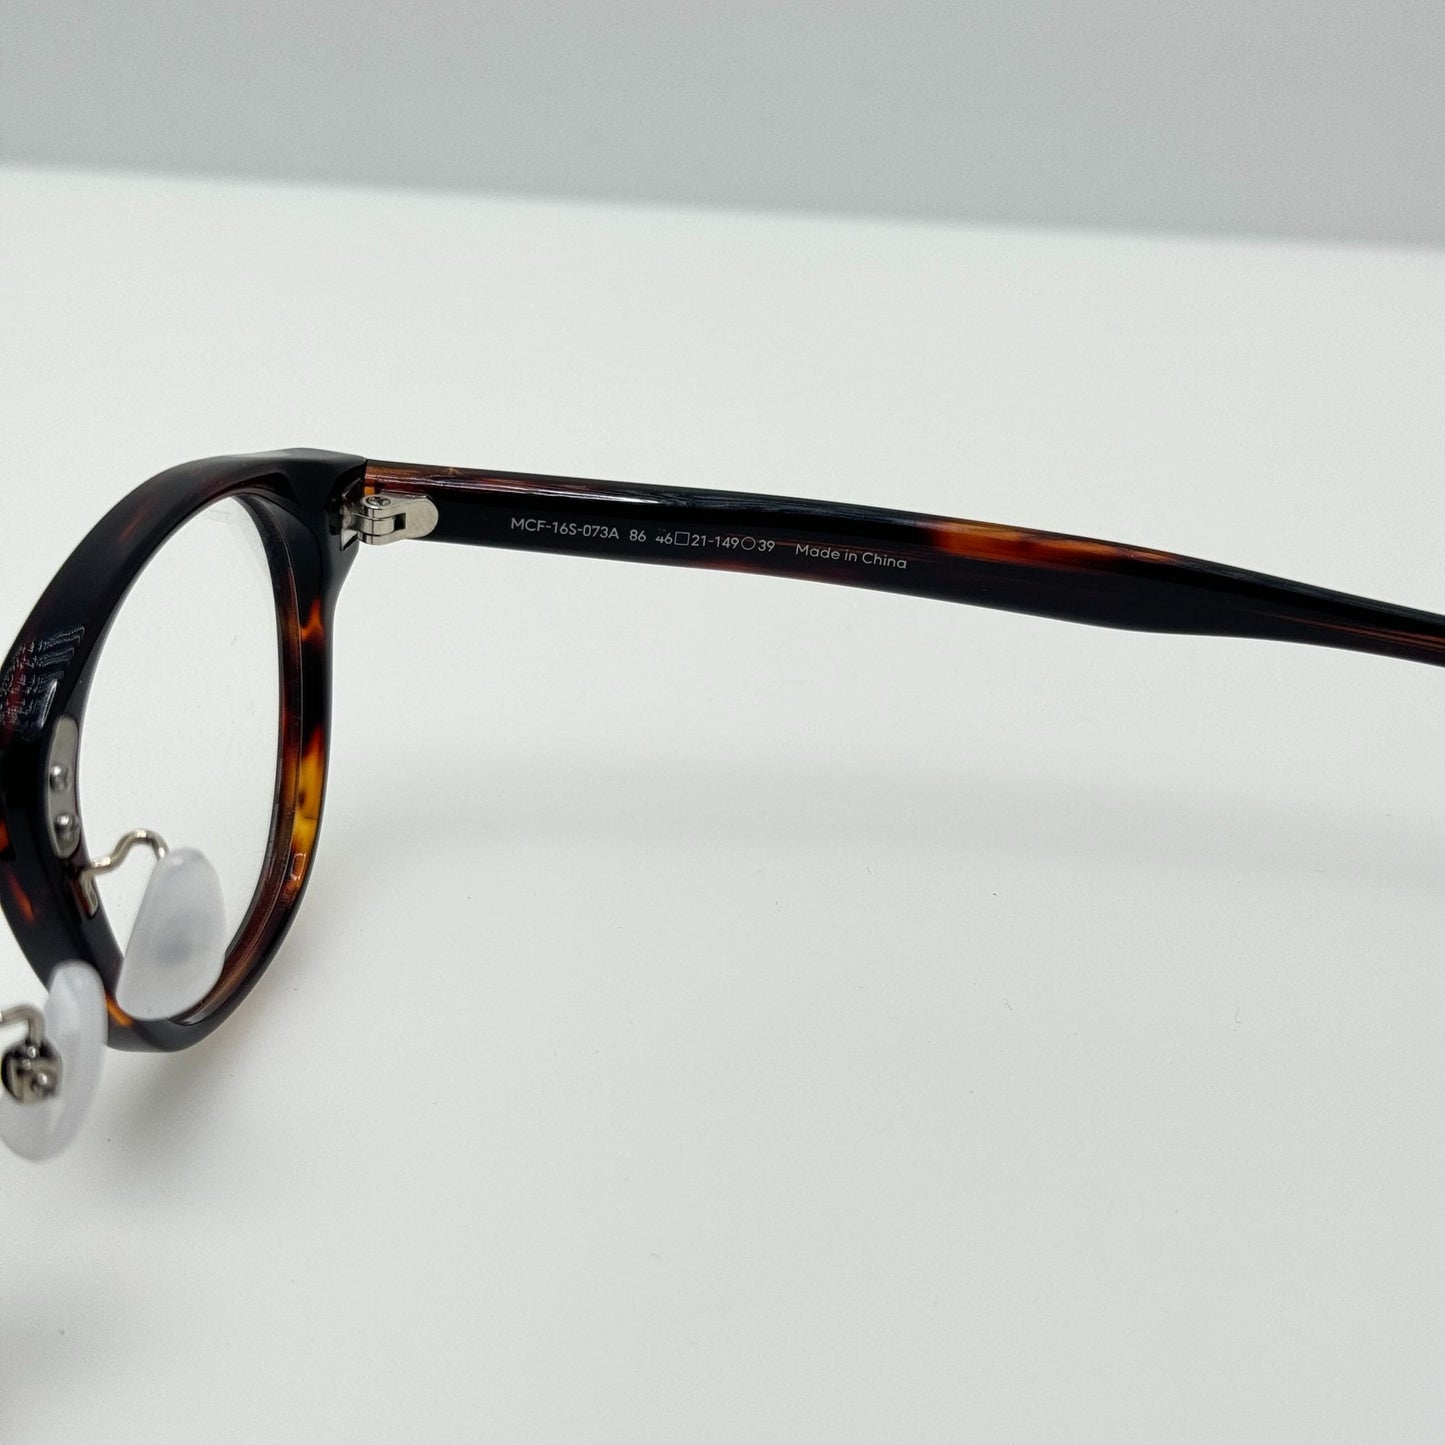 Jins Eyeglasses Eye Glasses Frames MCF-16S-073A 86 46-21-149 39